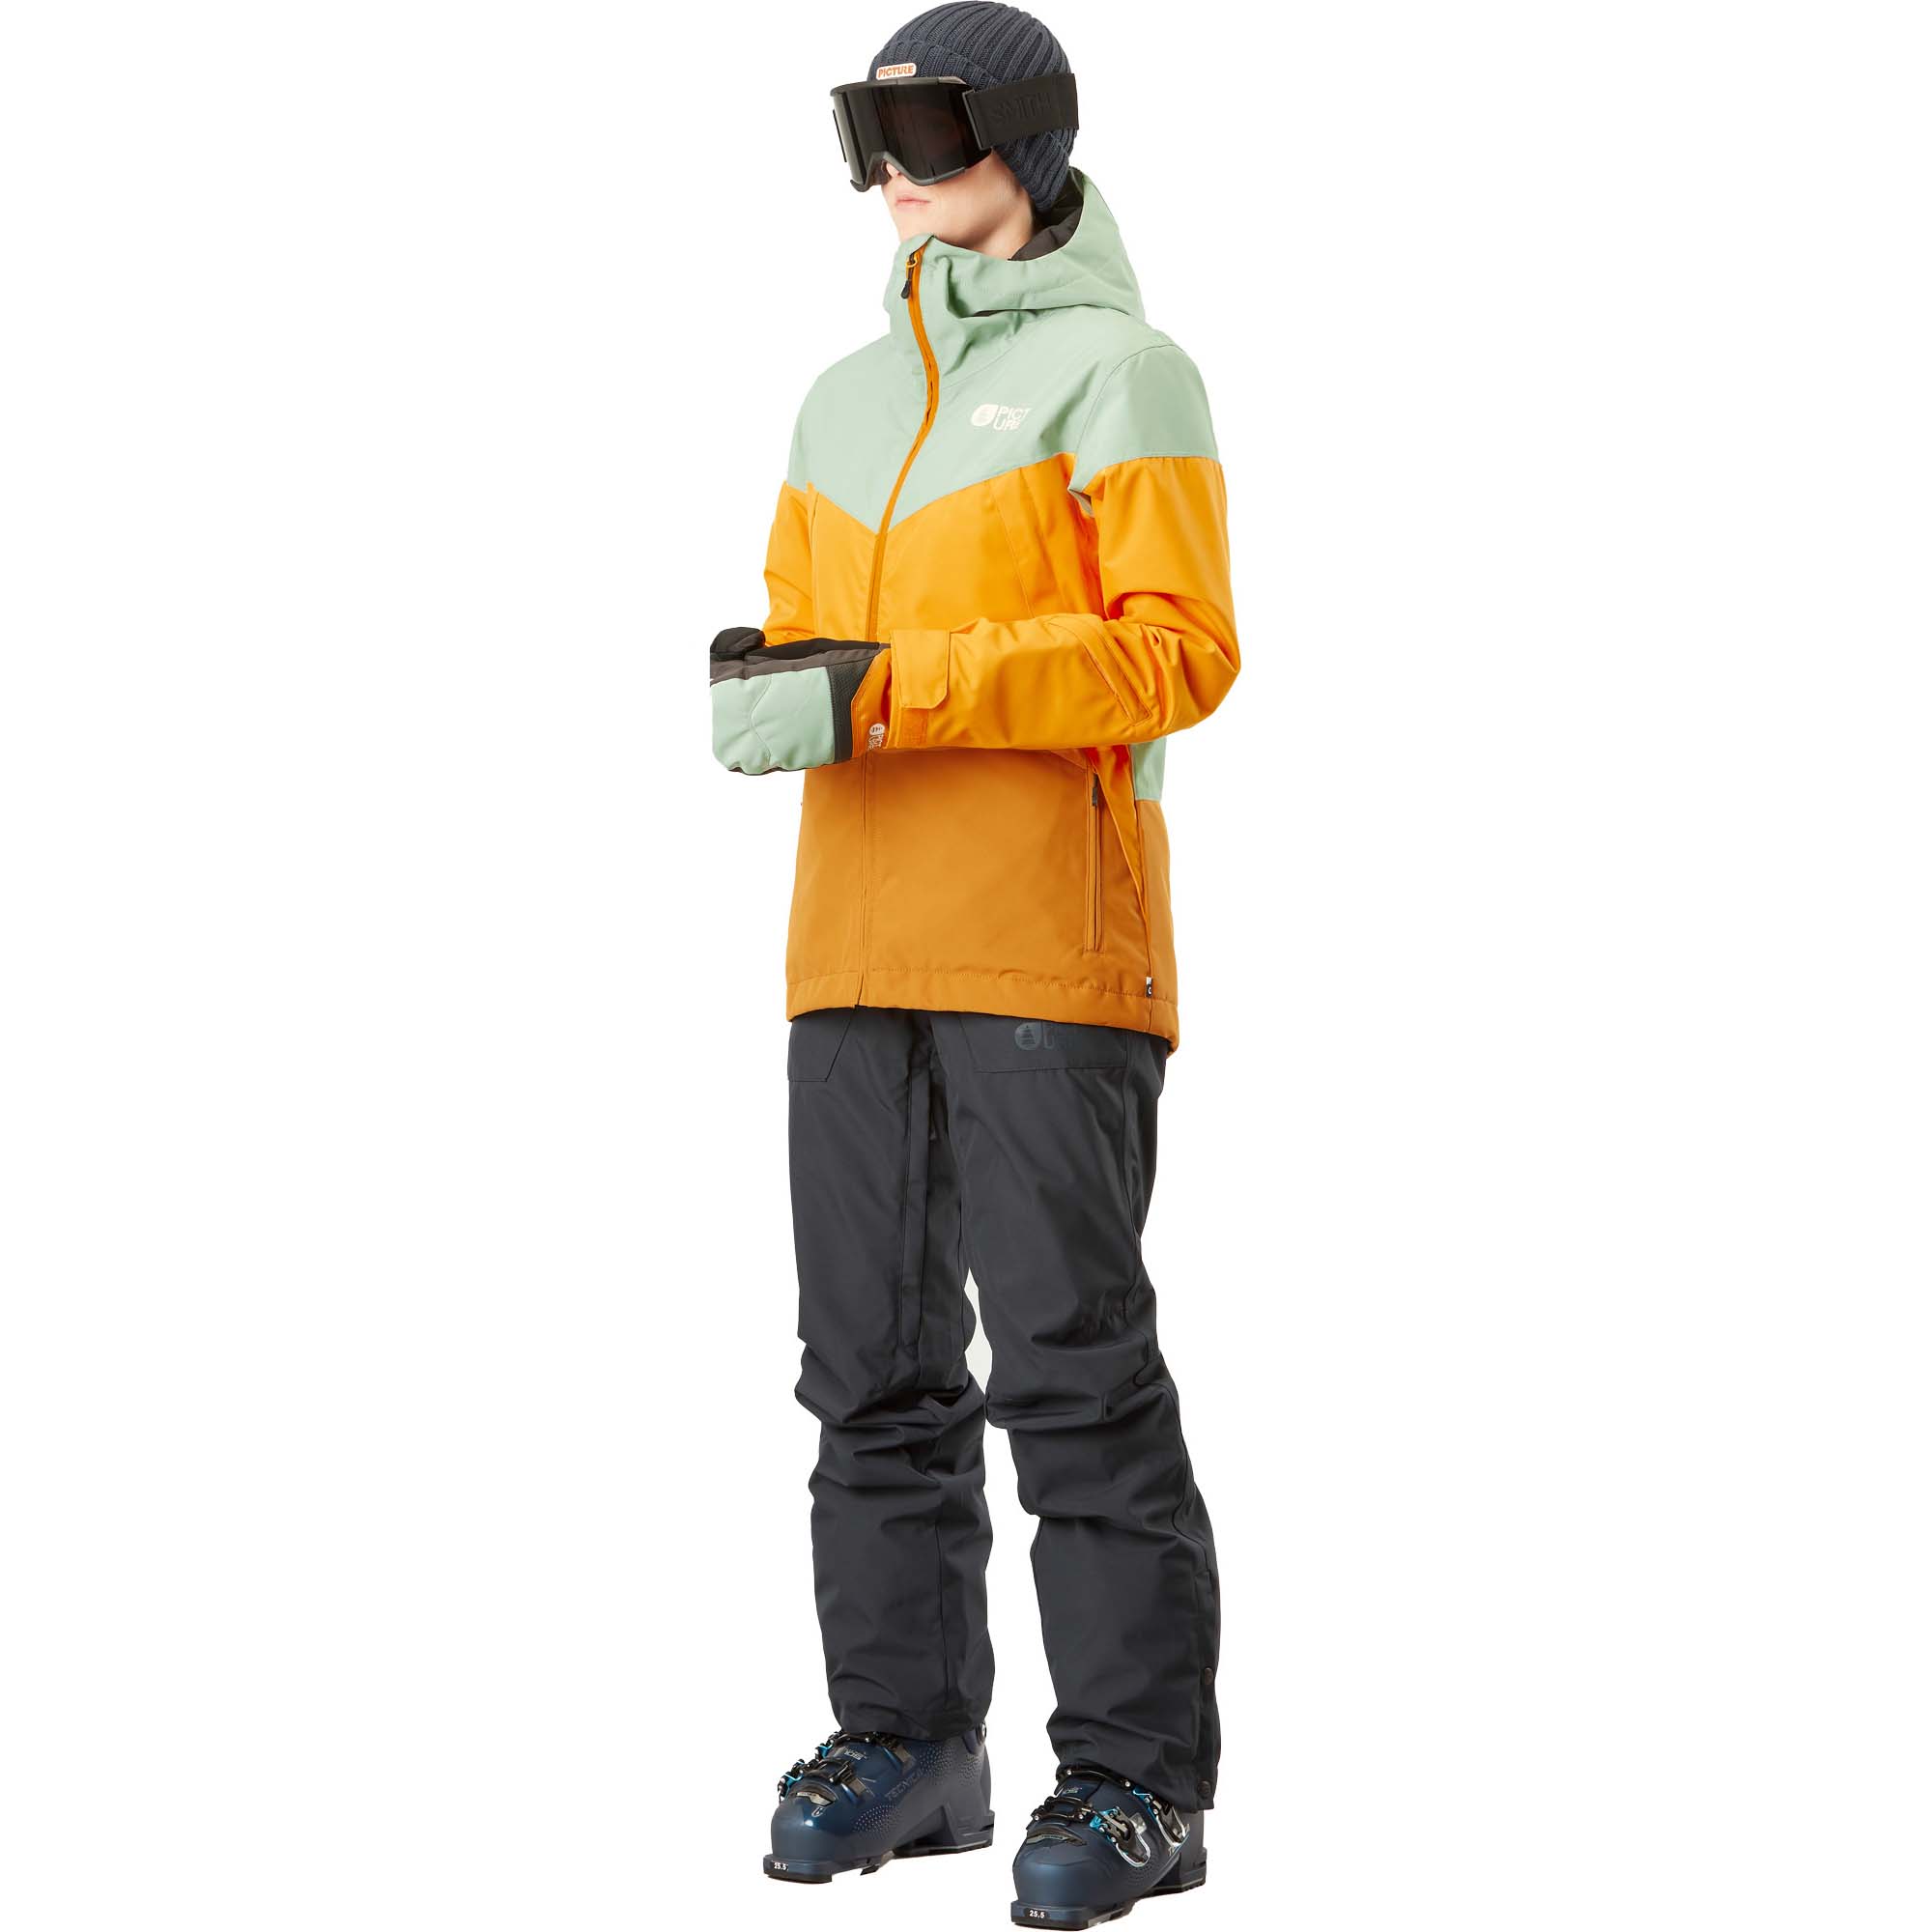 Picture Seakrest  Women's Ski/Snowboard Jacket